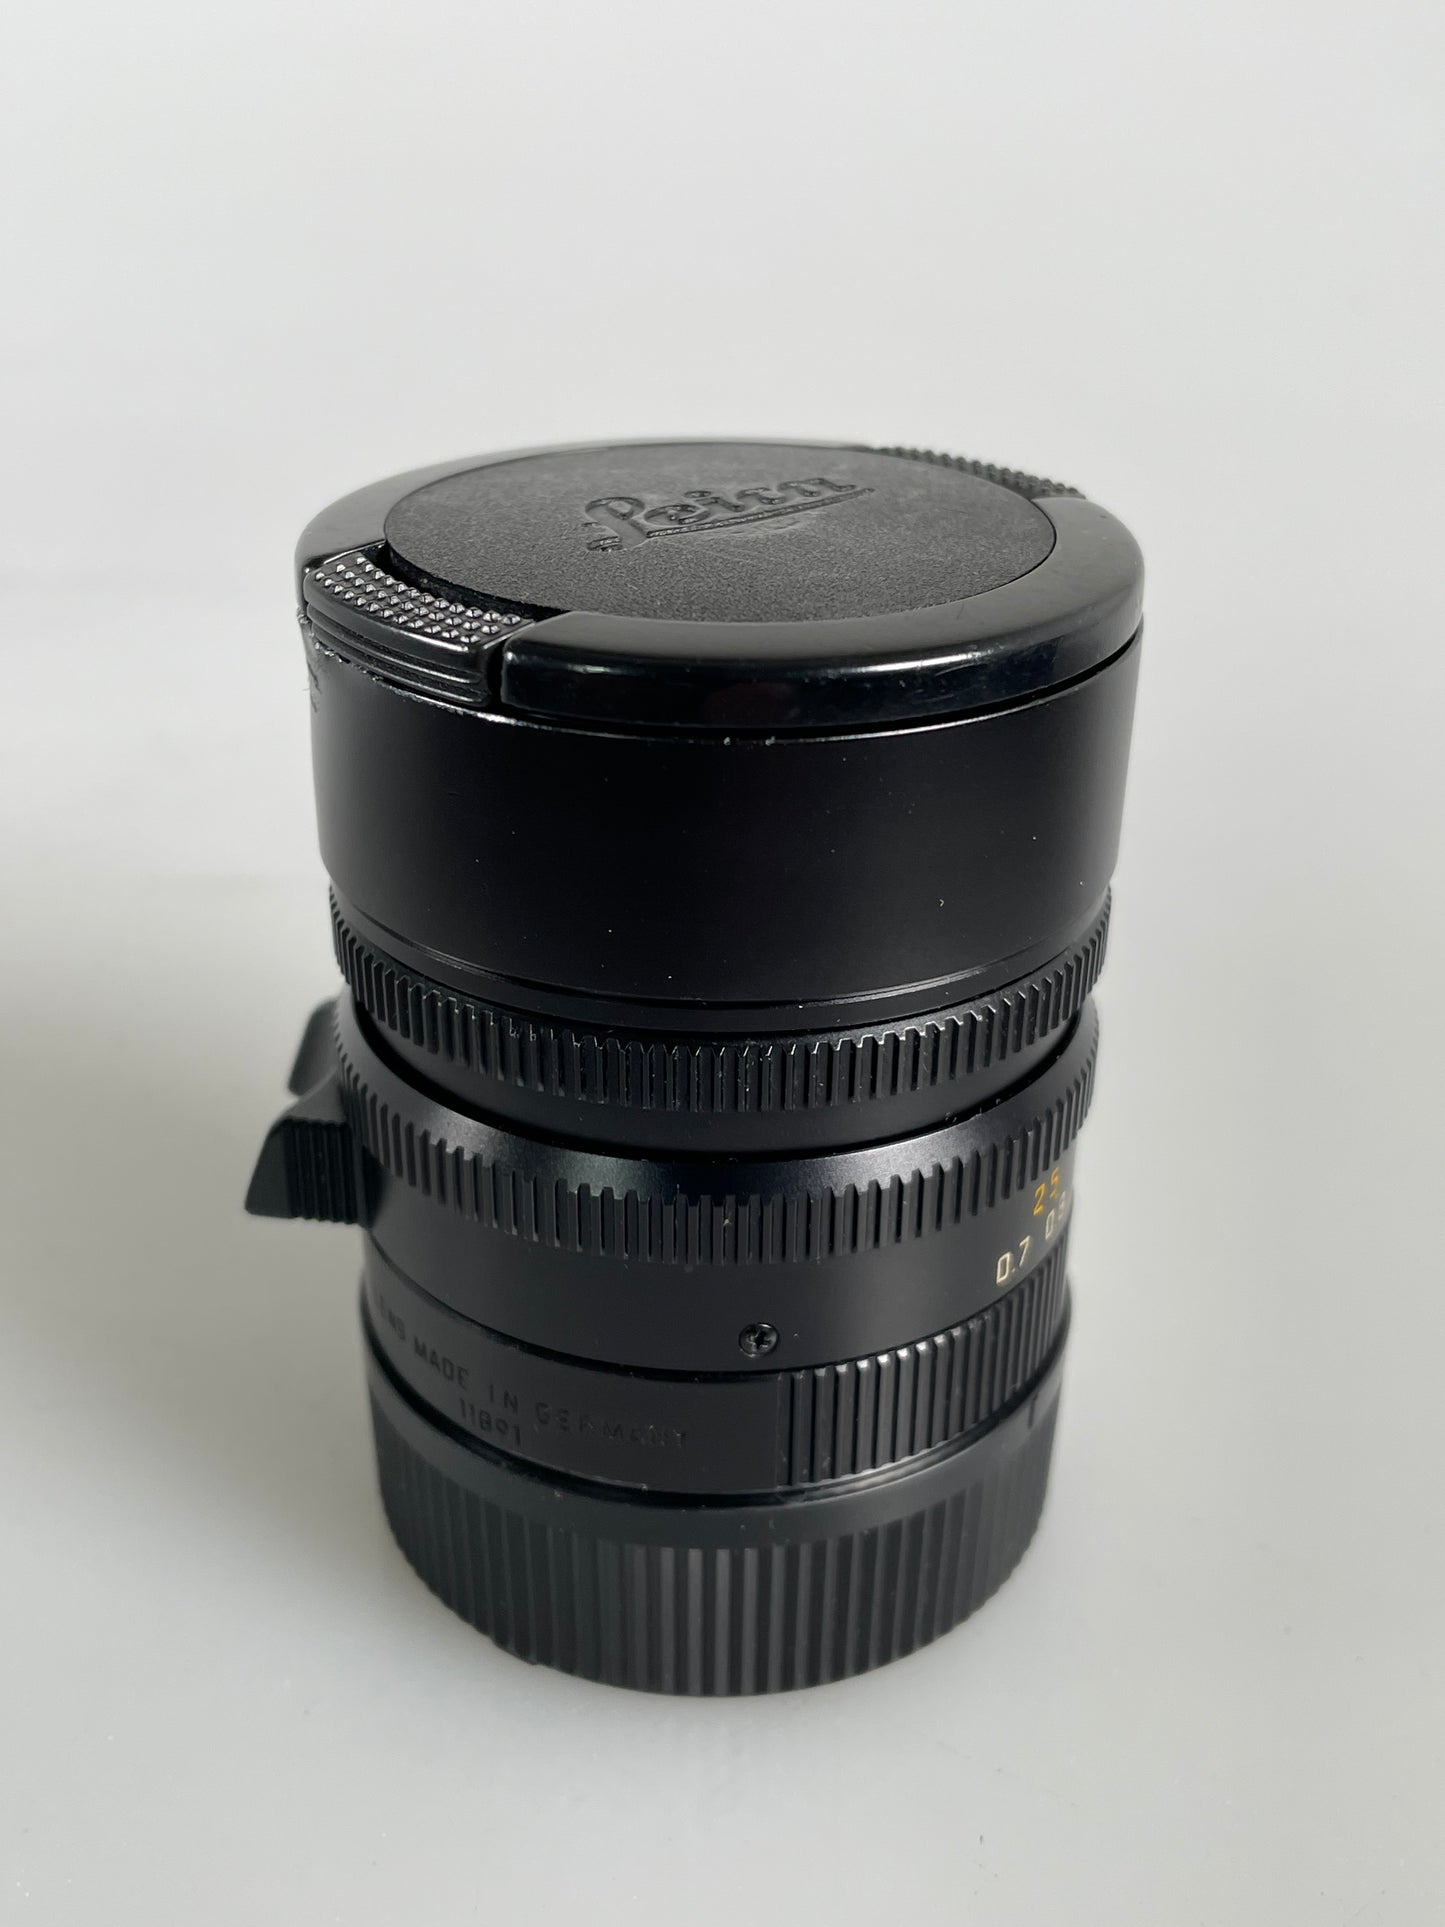 Leica 50MM f1.4 SUMMILUX-M ASPH 6BIT BLACK LENS 11891